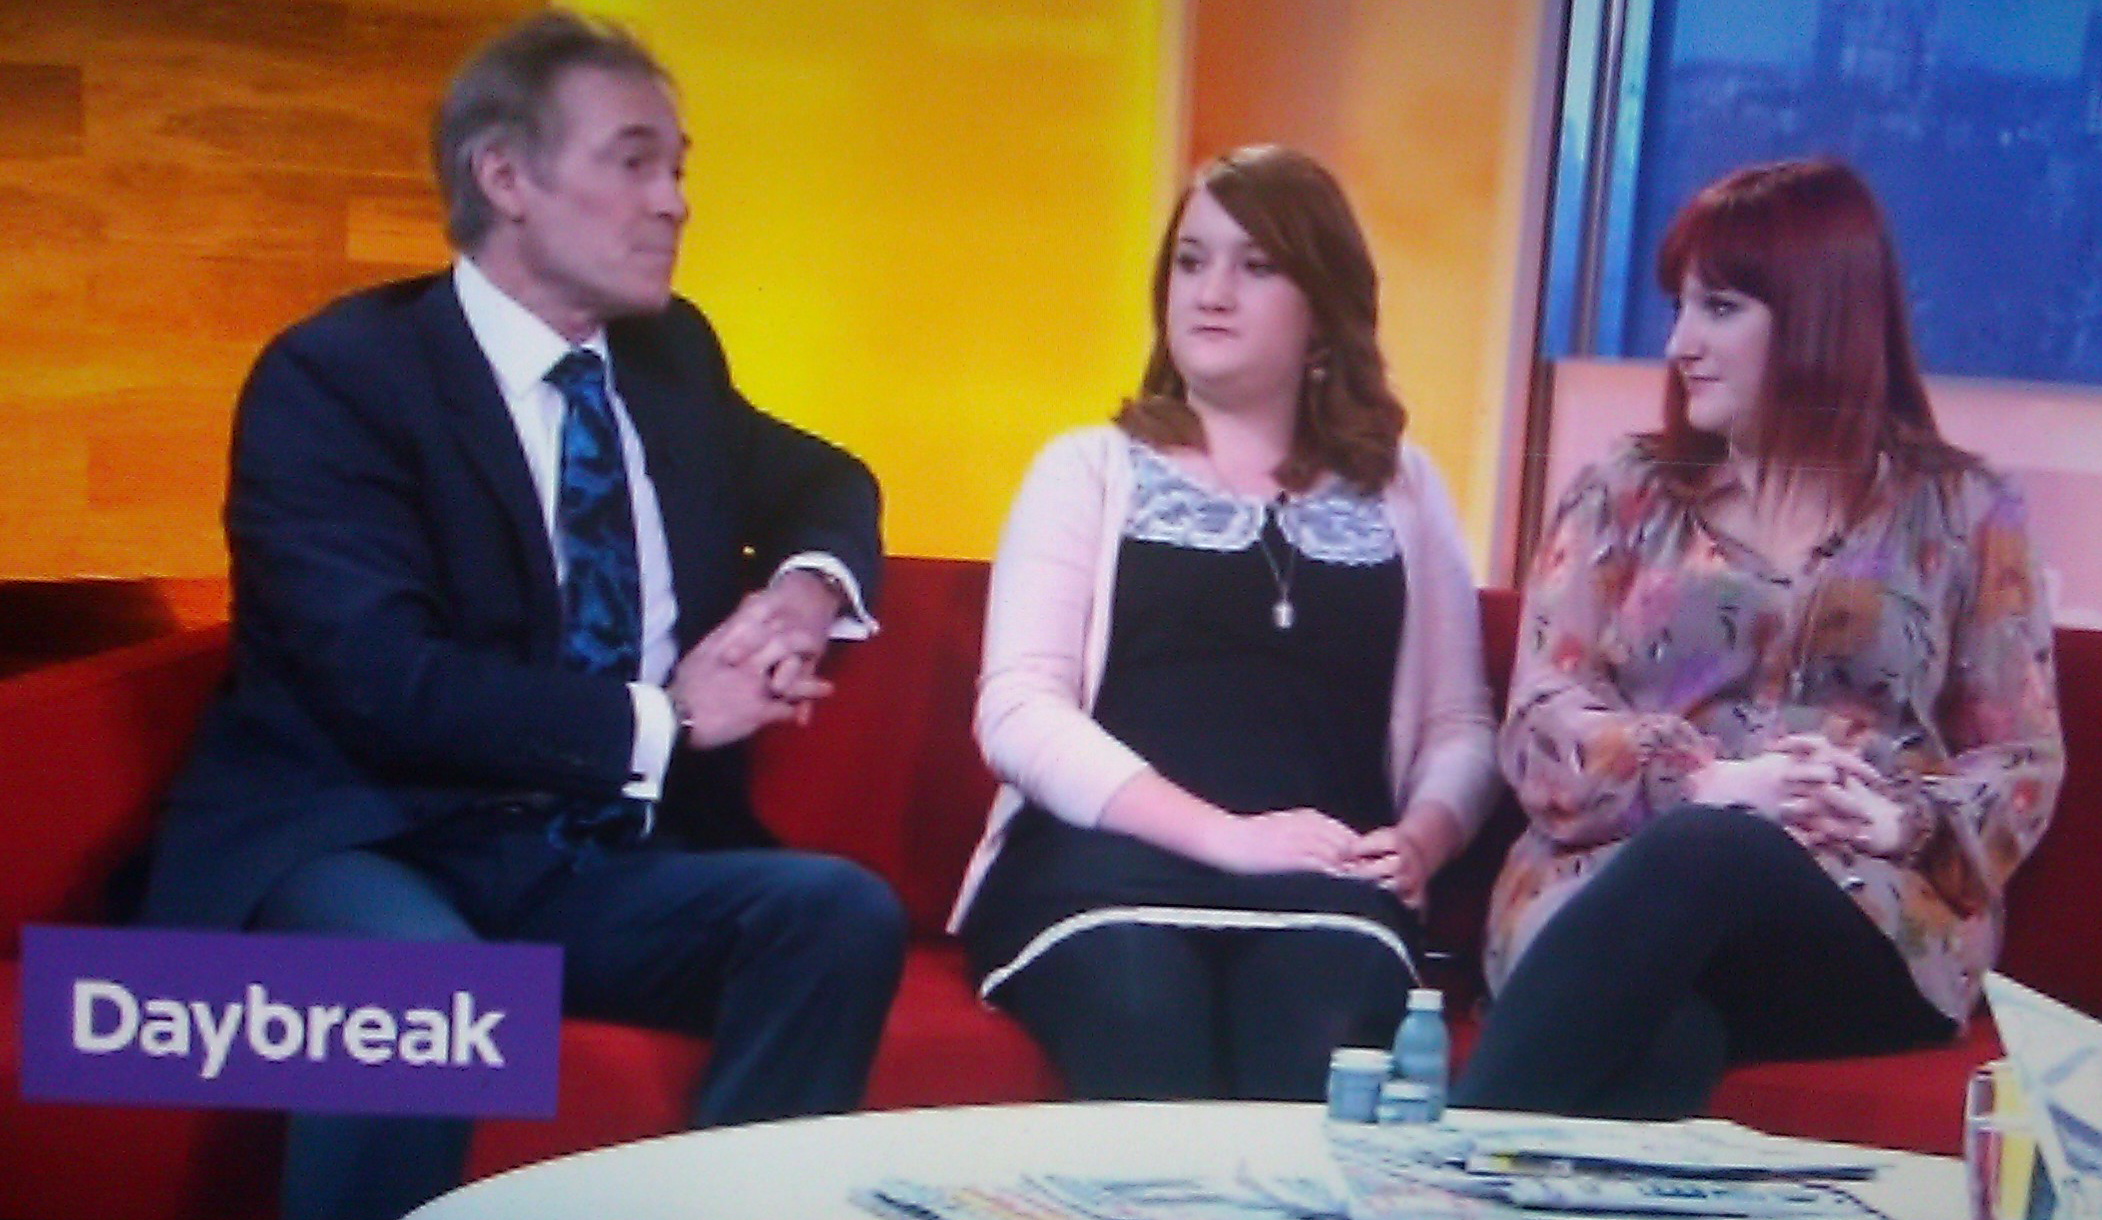 The eczema cream story appears on ITV's Daybreak